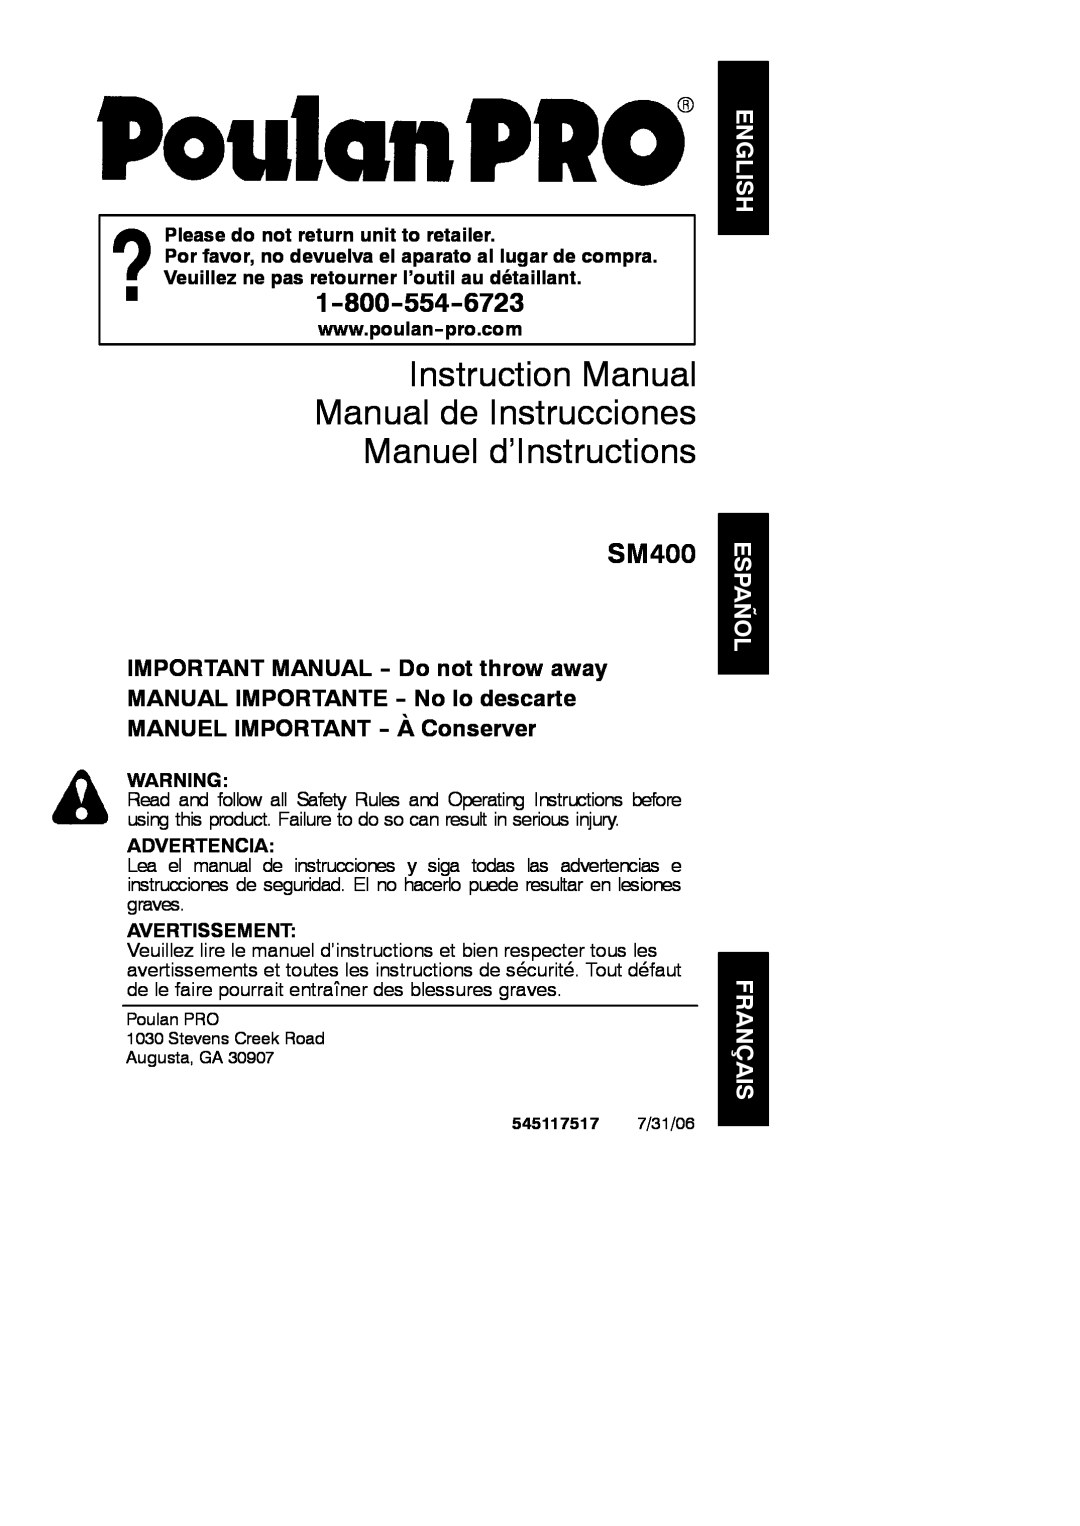 Poulan 545117517 instruction manual English Español Français, Manuel d’Instructions, SM400, Advertencia, Avertissement 